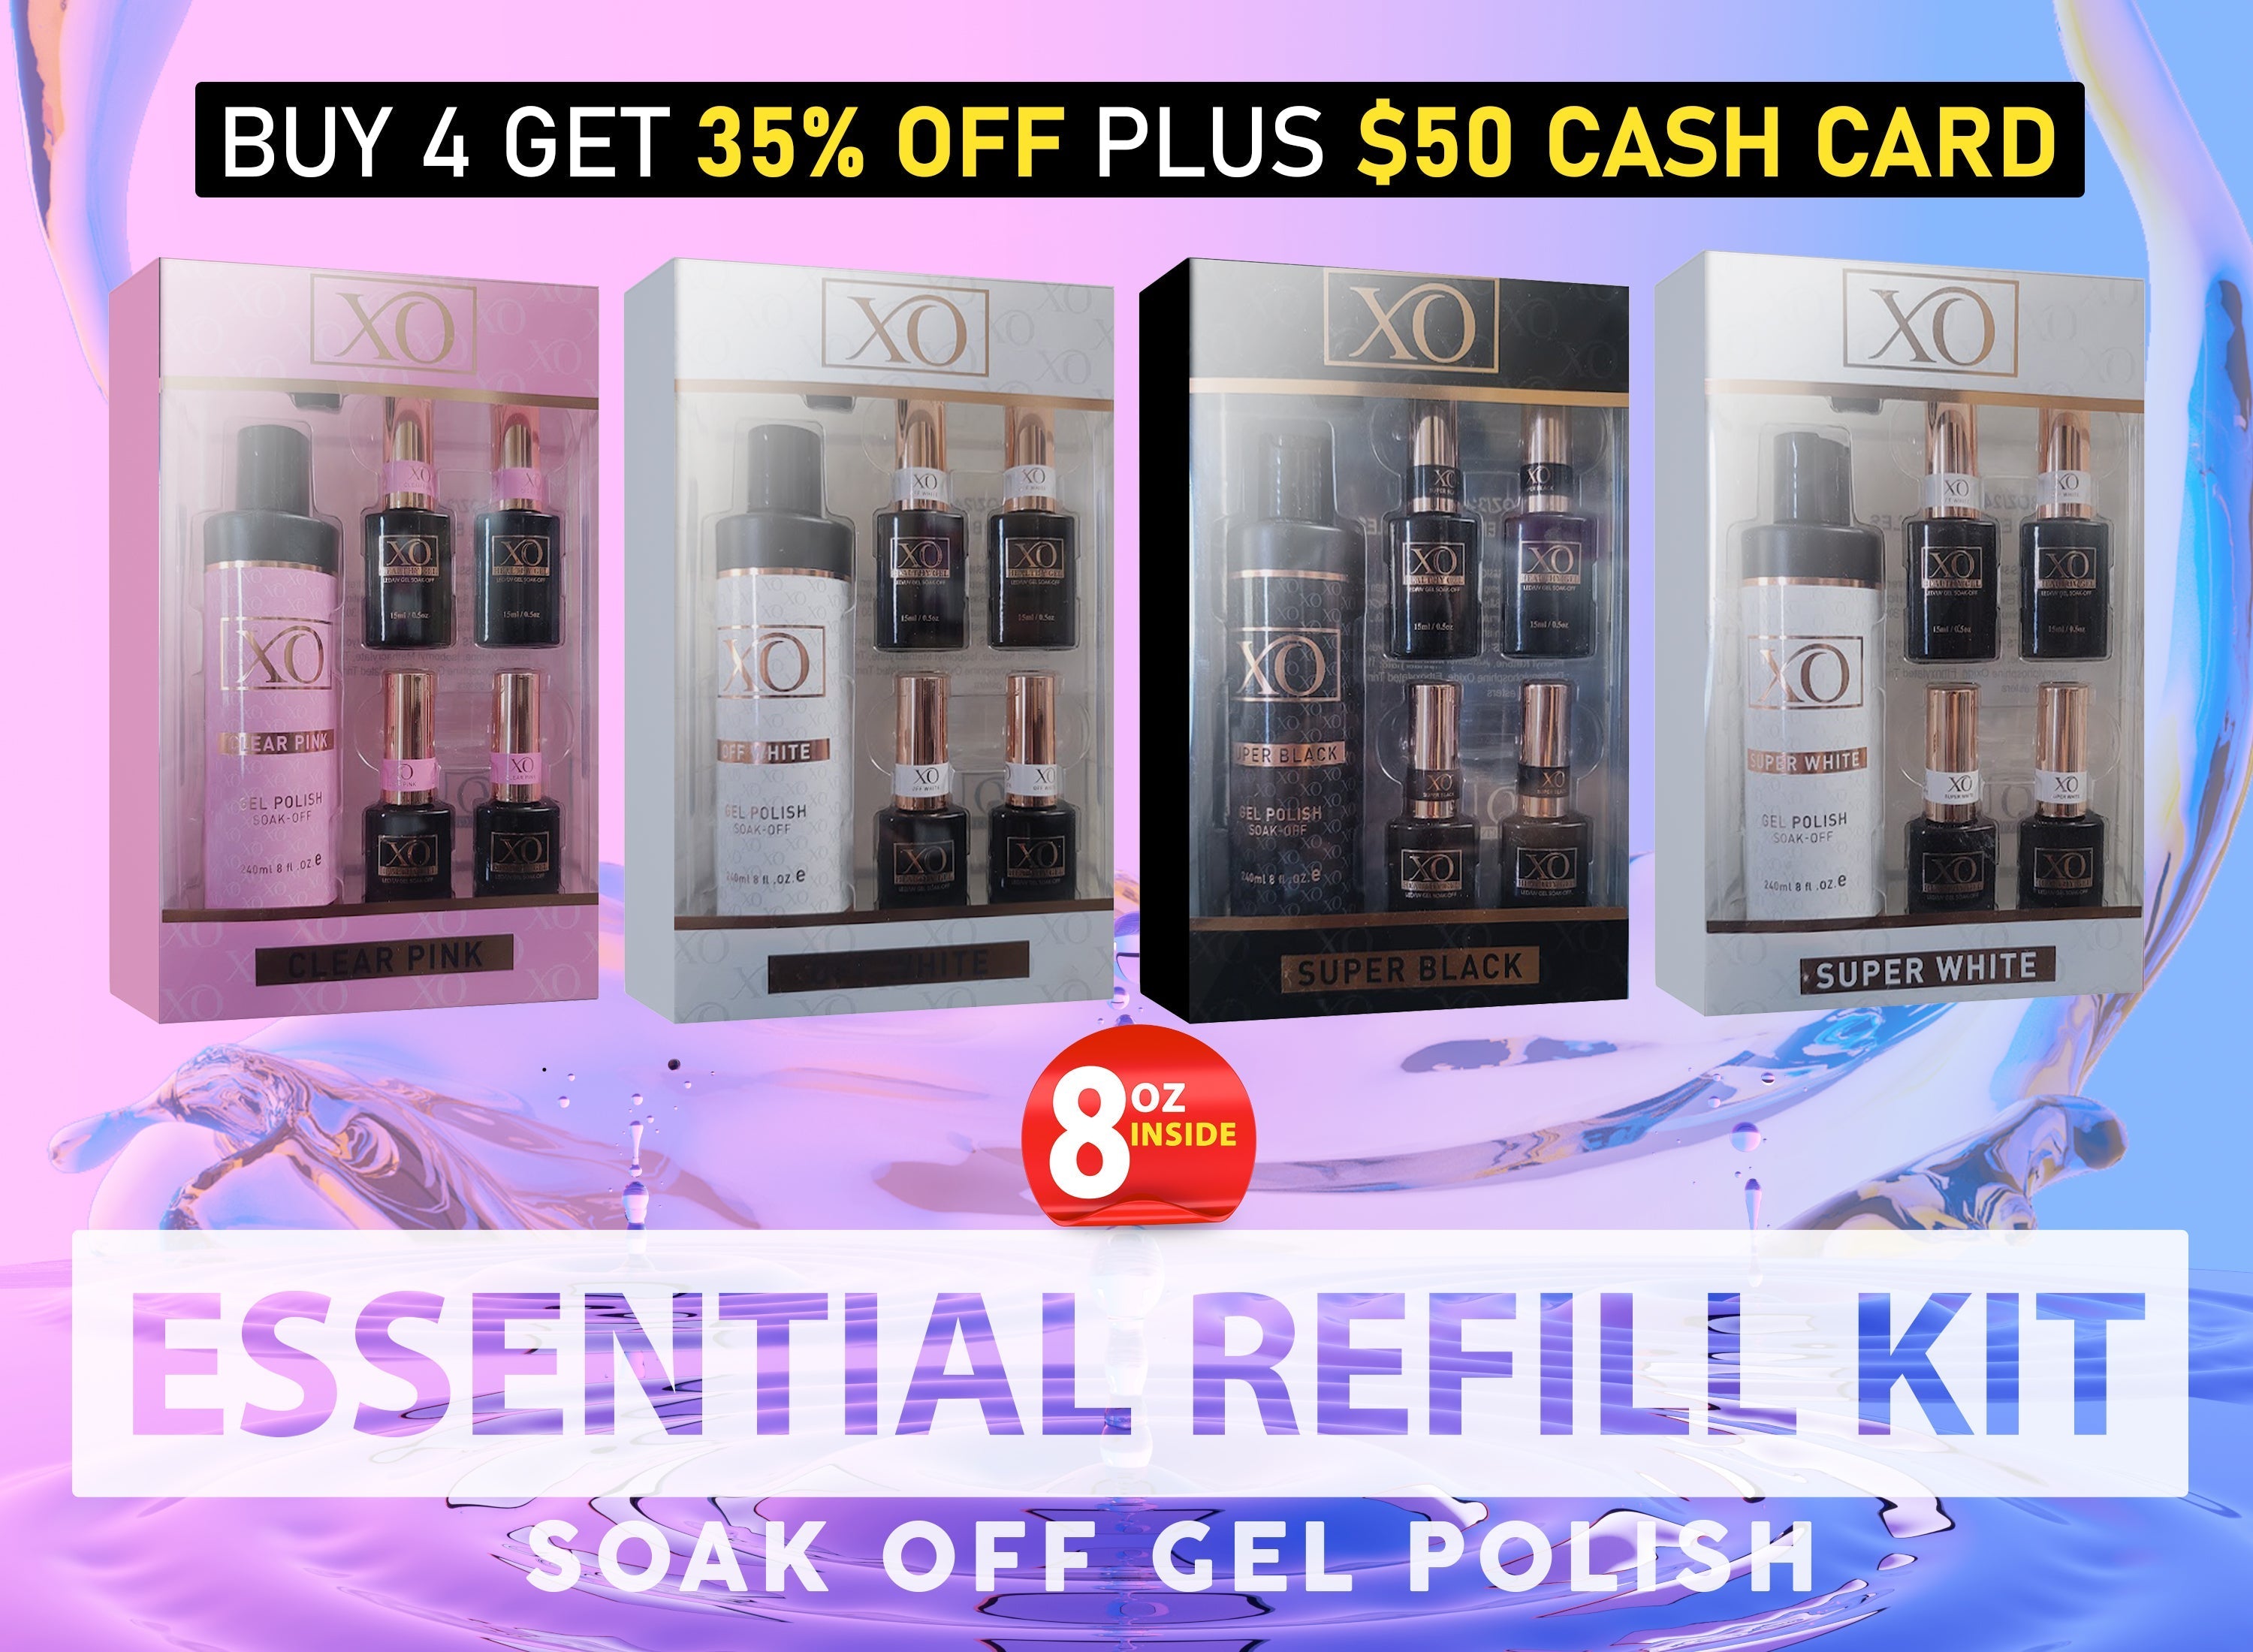 XO Essential Refill Kit (Clear Pink, Off White, Black, White) & $50 Cash Card-GEL POLISH SOAK-OFF-XO-Combo 4 Kit ($50 Cash Card Included)- Nail Supply American Gel Polish - Phuong Ni